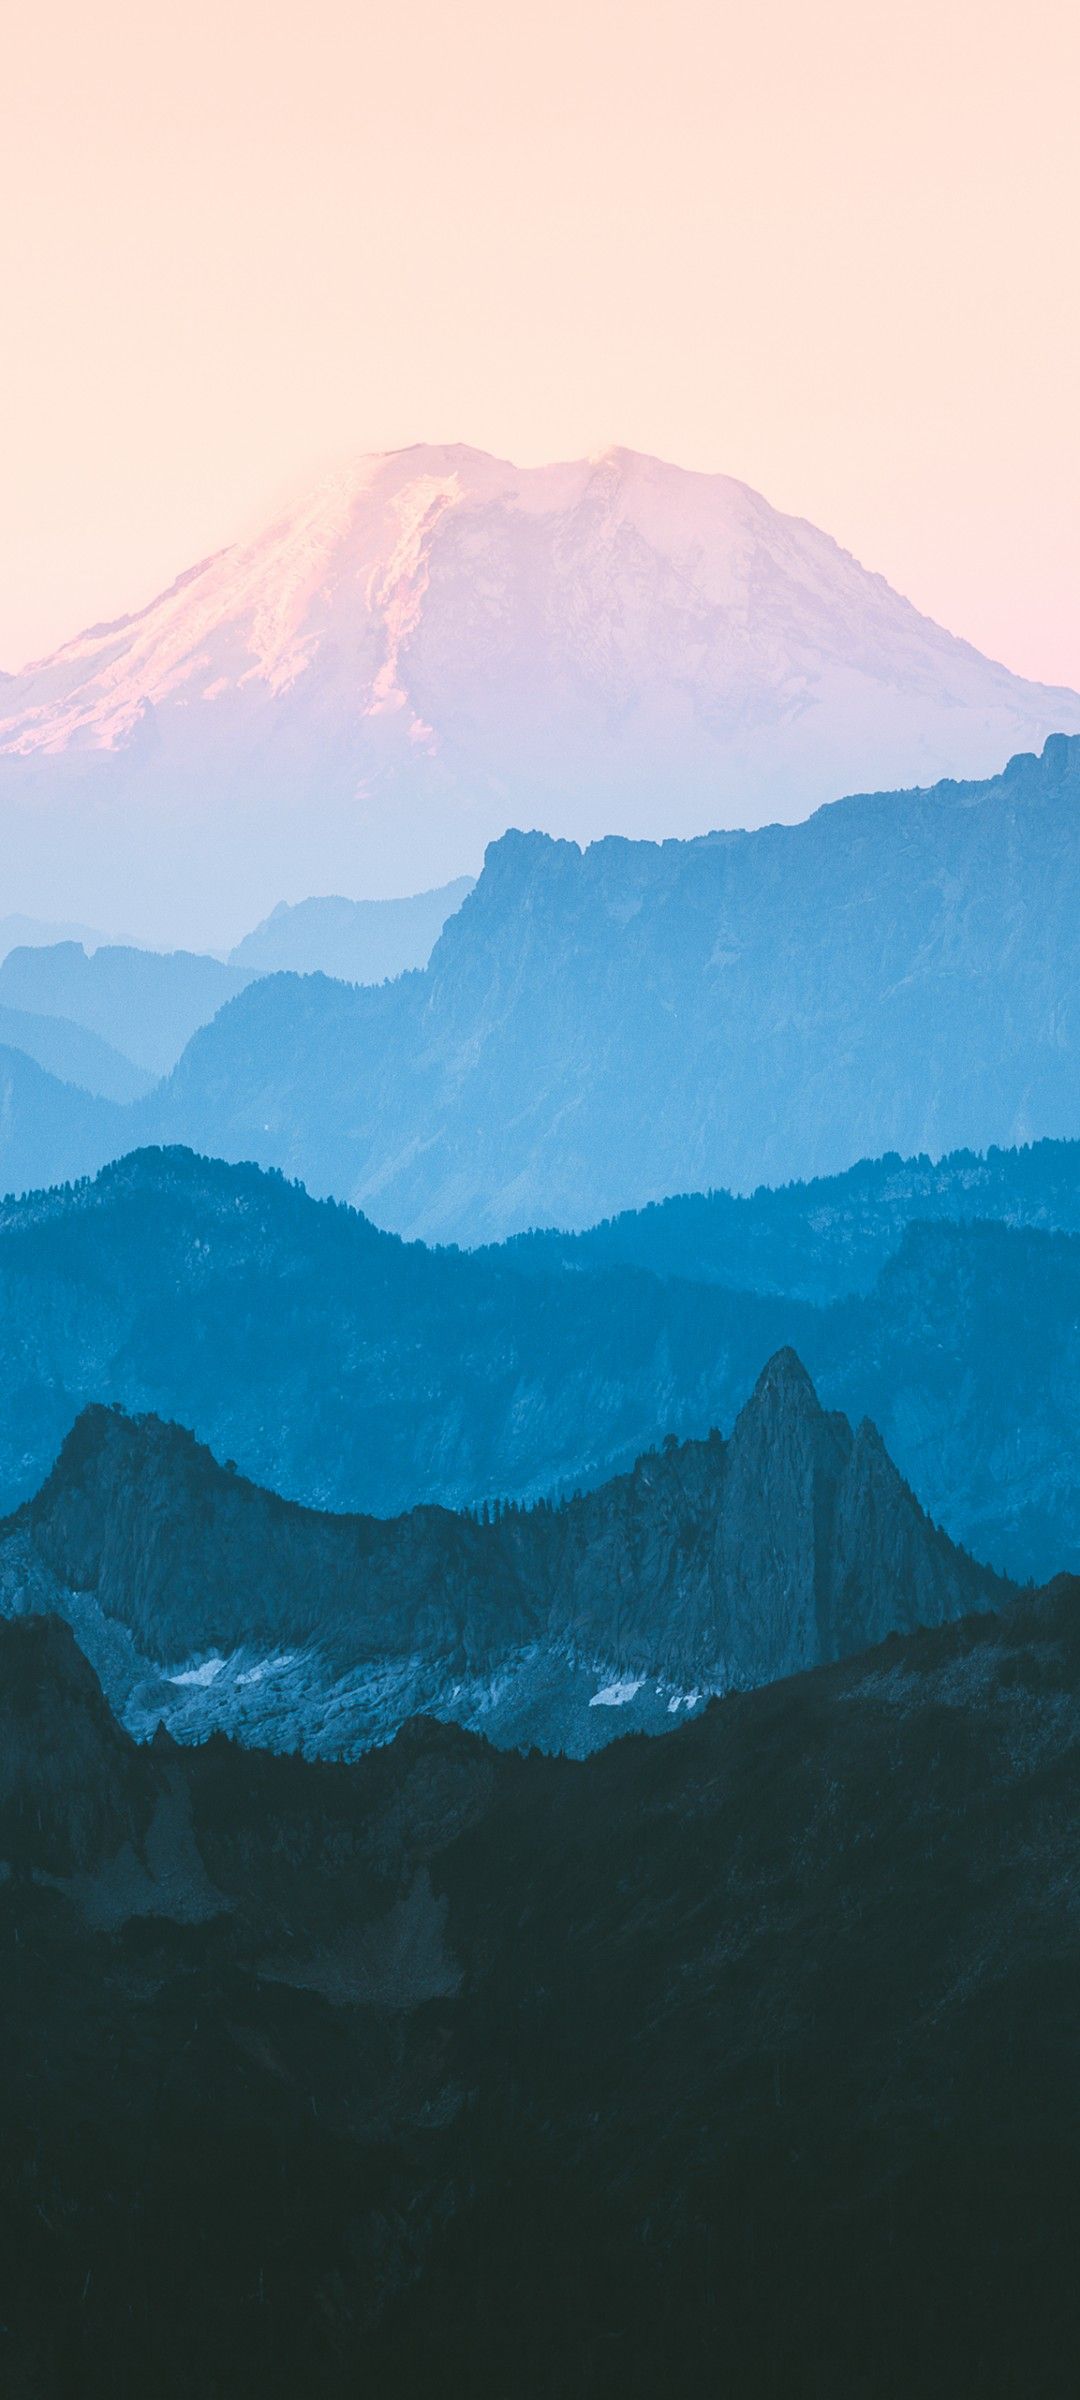 Cascade Range 4K Wallpaper, Mountain range, Foggy, Morning, Layers, Nature